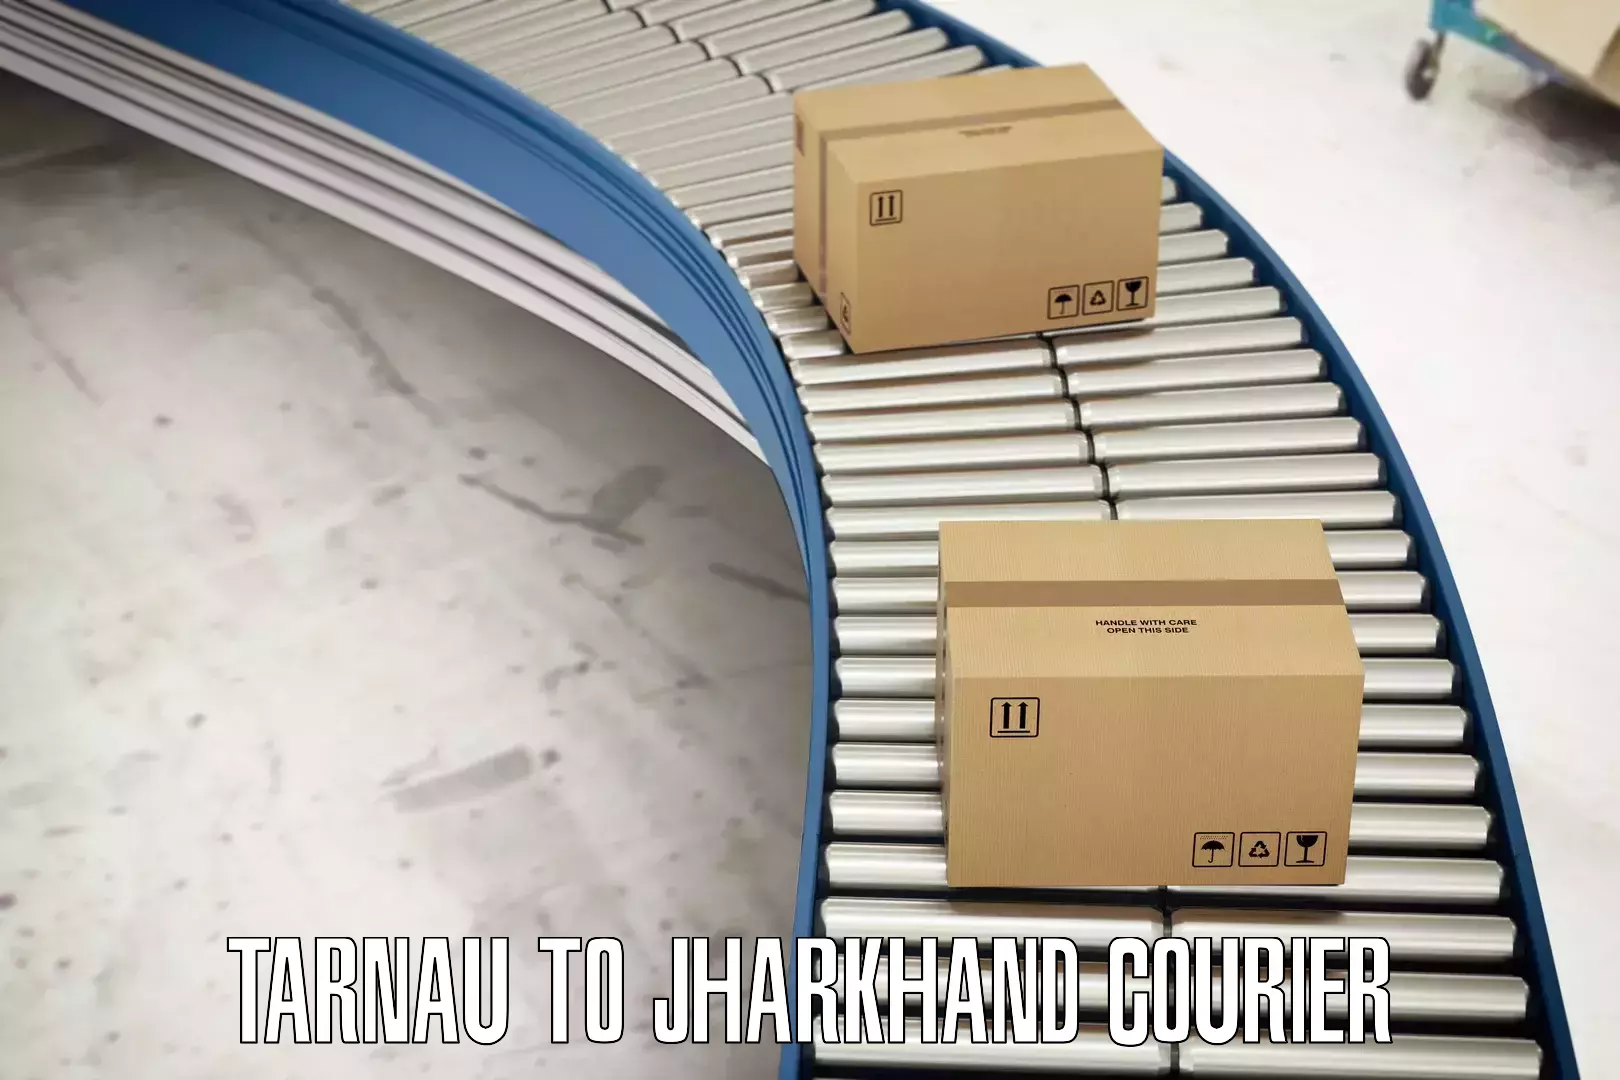 Reliable courier service Tarnau to Tamar